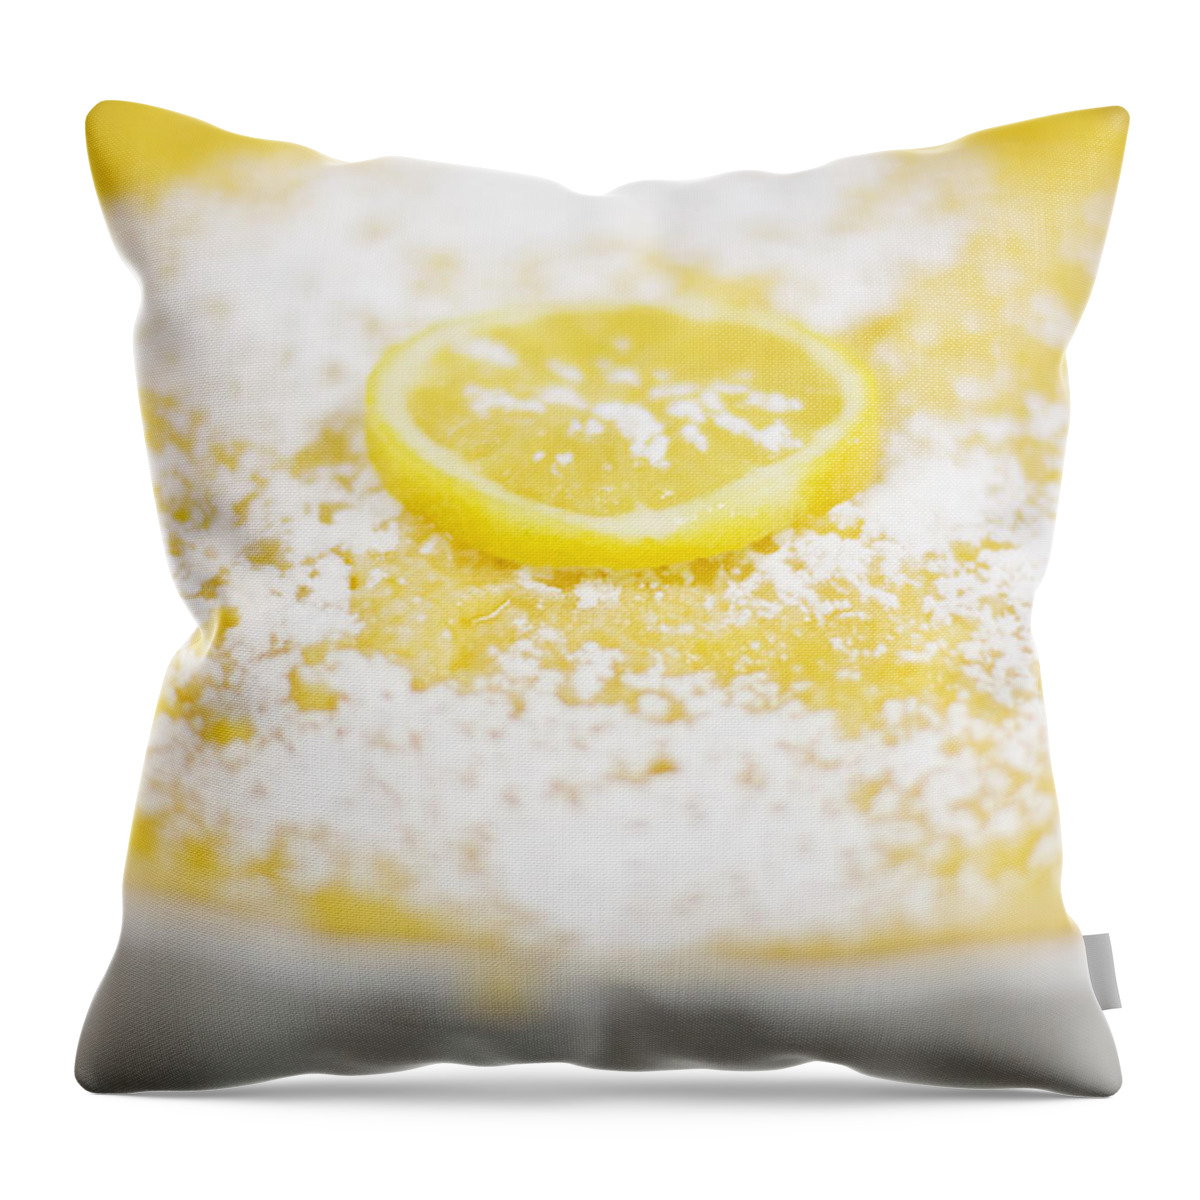 Lemmon Throw Pillow featuring the photograph Lemon Curd Tart by Jorgo Photography